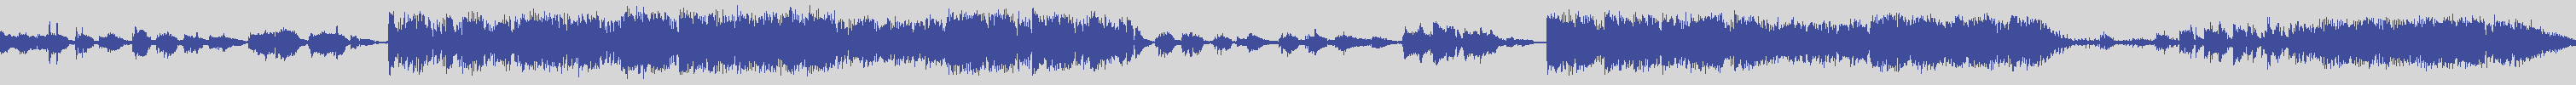 digiphonic_records [DPR013] Little Tony - La Folle Corsa [Original Mix] audio wave form